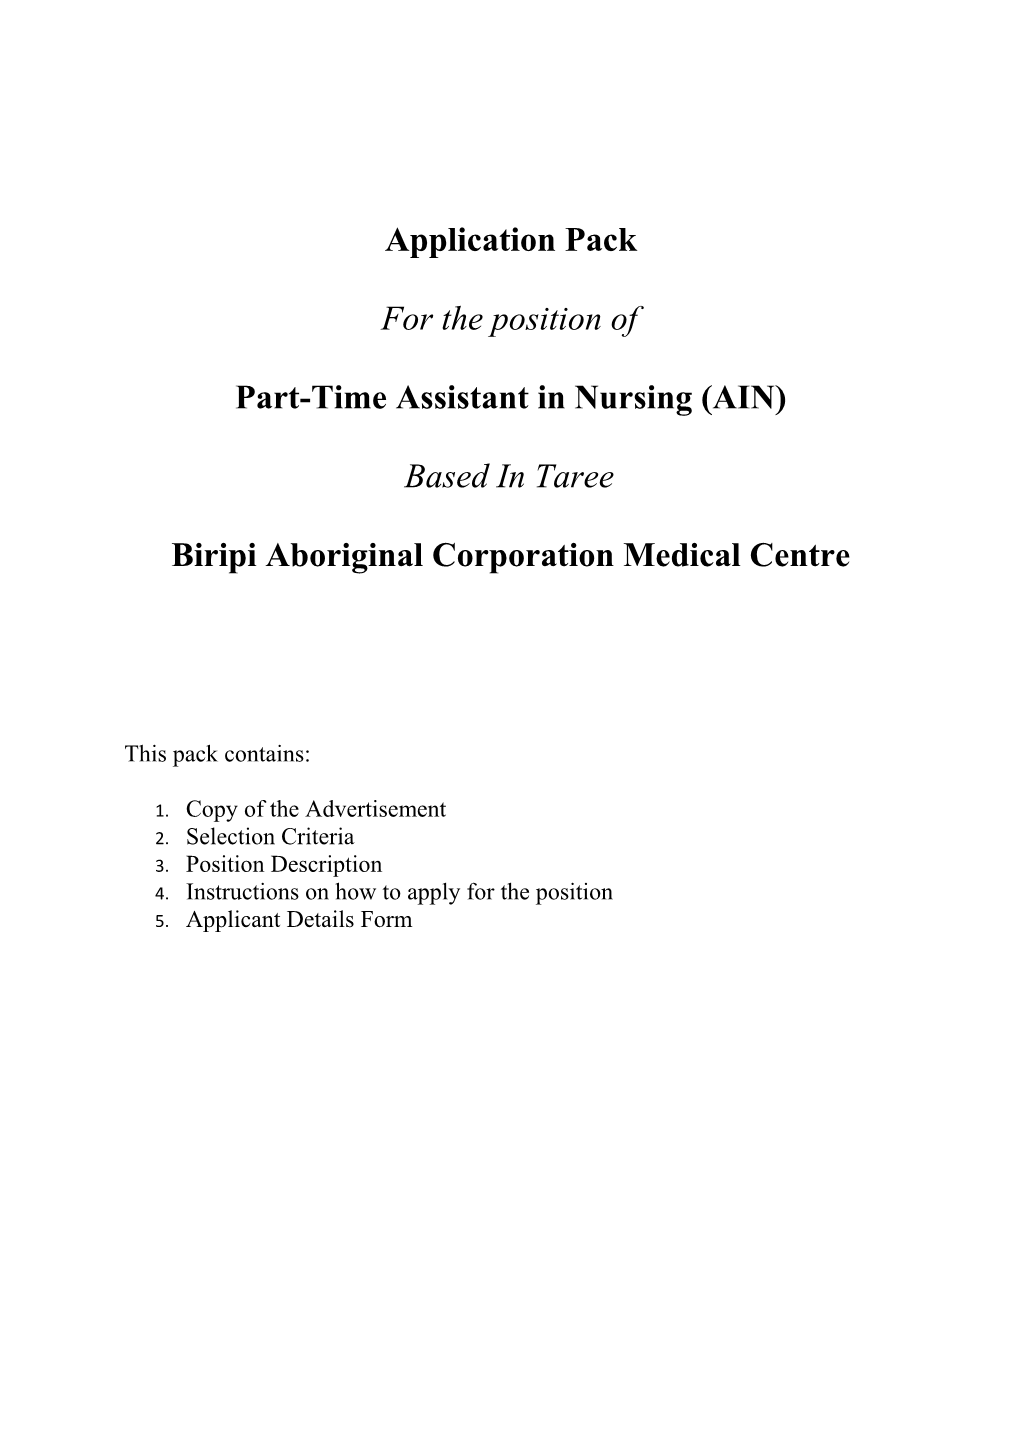 Part-Time Assistant in Nursing (AIN)